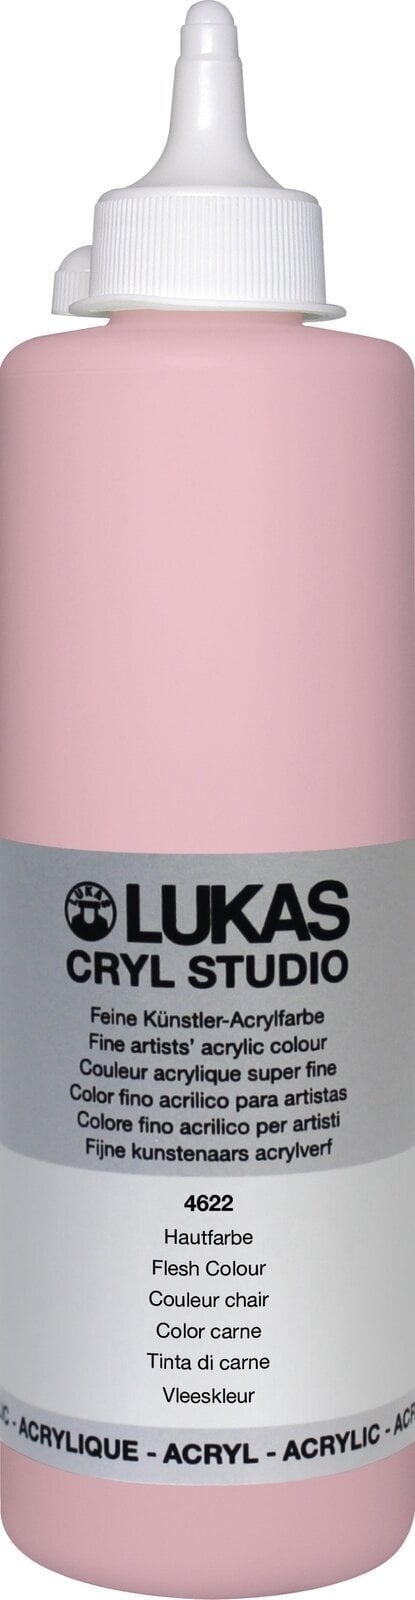 Akrylová barva Lukas Cryl Studio Acrylic Paint Plastic Bottle Akrylová barva Peach Pink 500 ml 1 ks